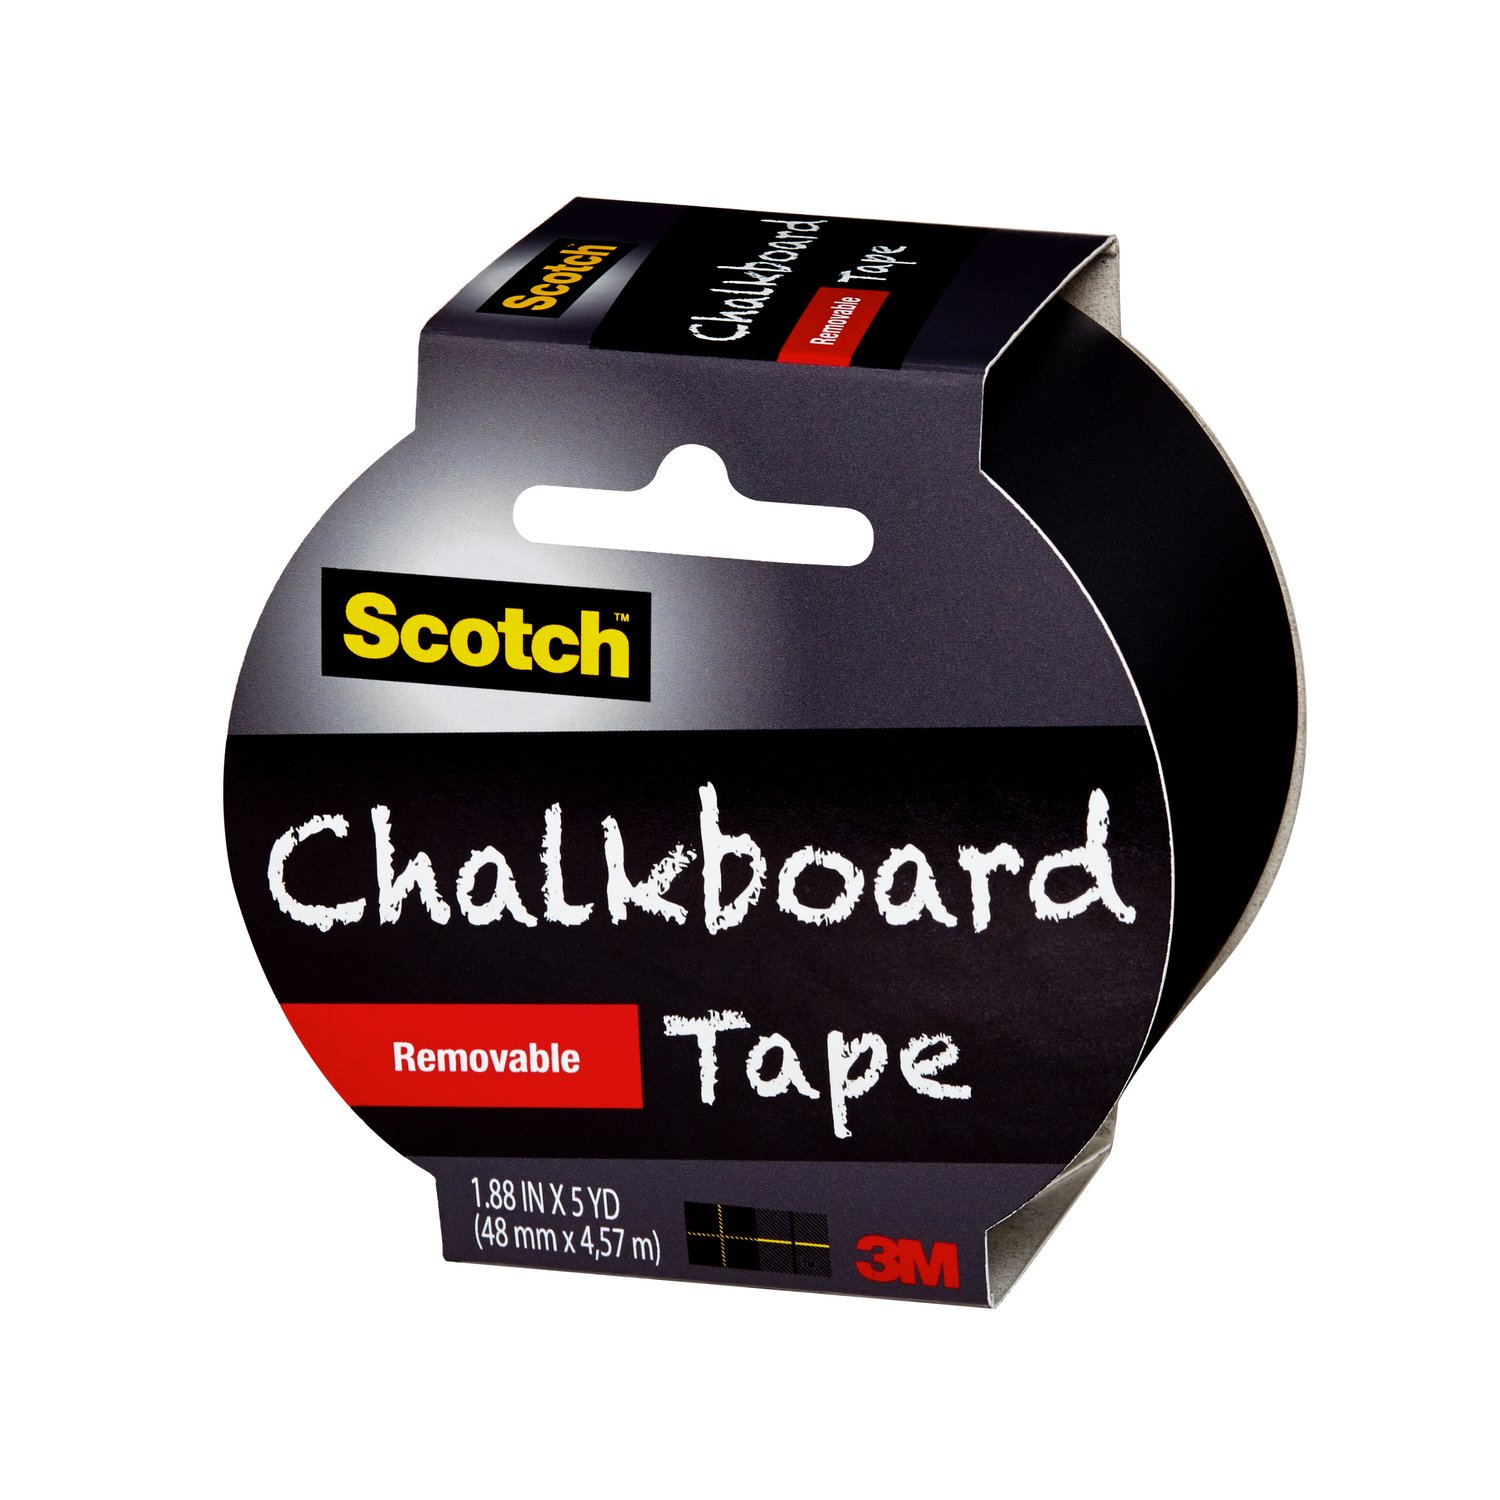 7100091430 - Scotch Chalkboard Tape 1905R-CB-BLK, 1.88 in x 5 yd (48 mm x 4,57 m)